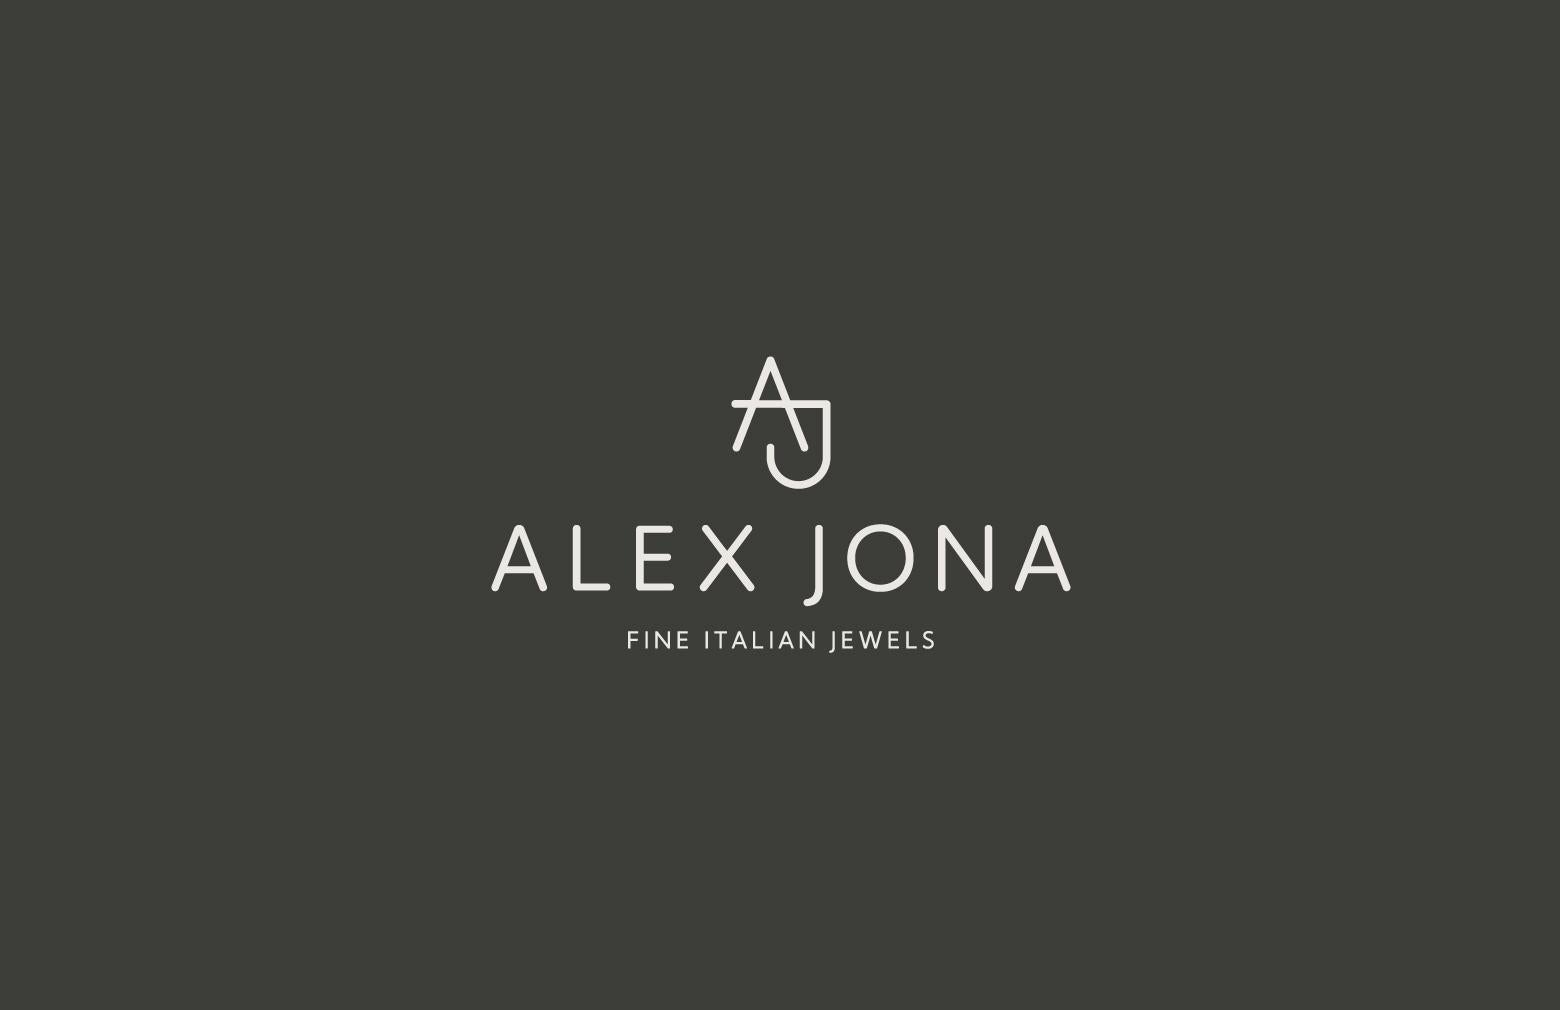 Alex Jona Blue and White Enamel Sterling Silver Cufflinks For Sale 7